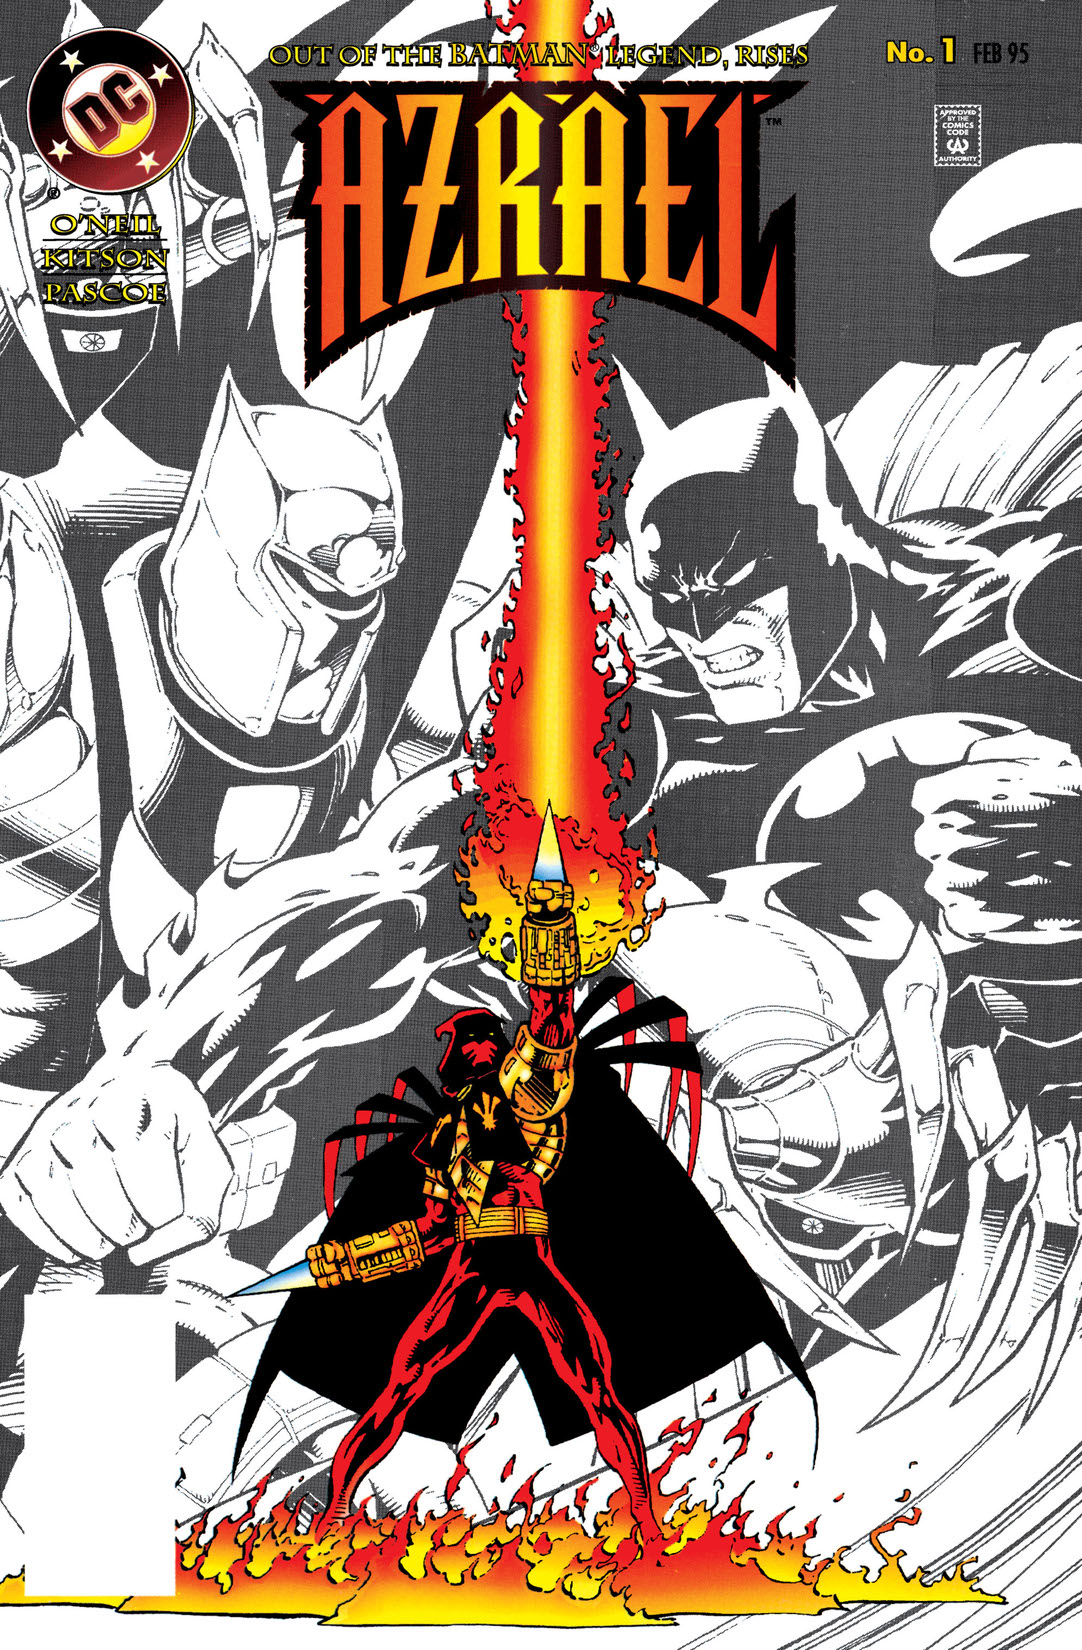 Azrael: Agent of the Bat #1 preview images